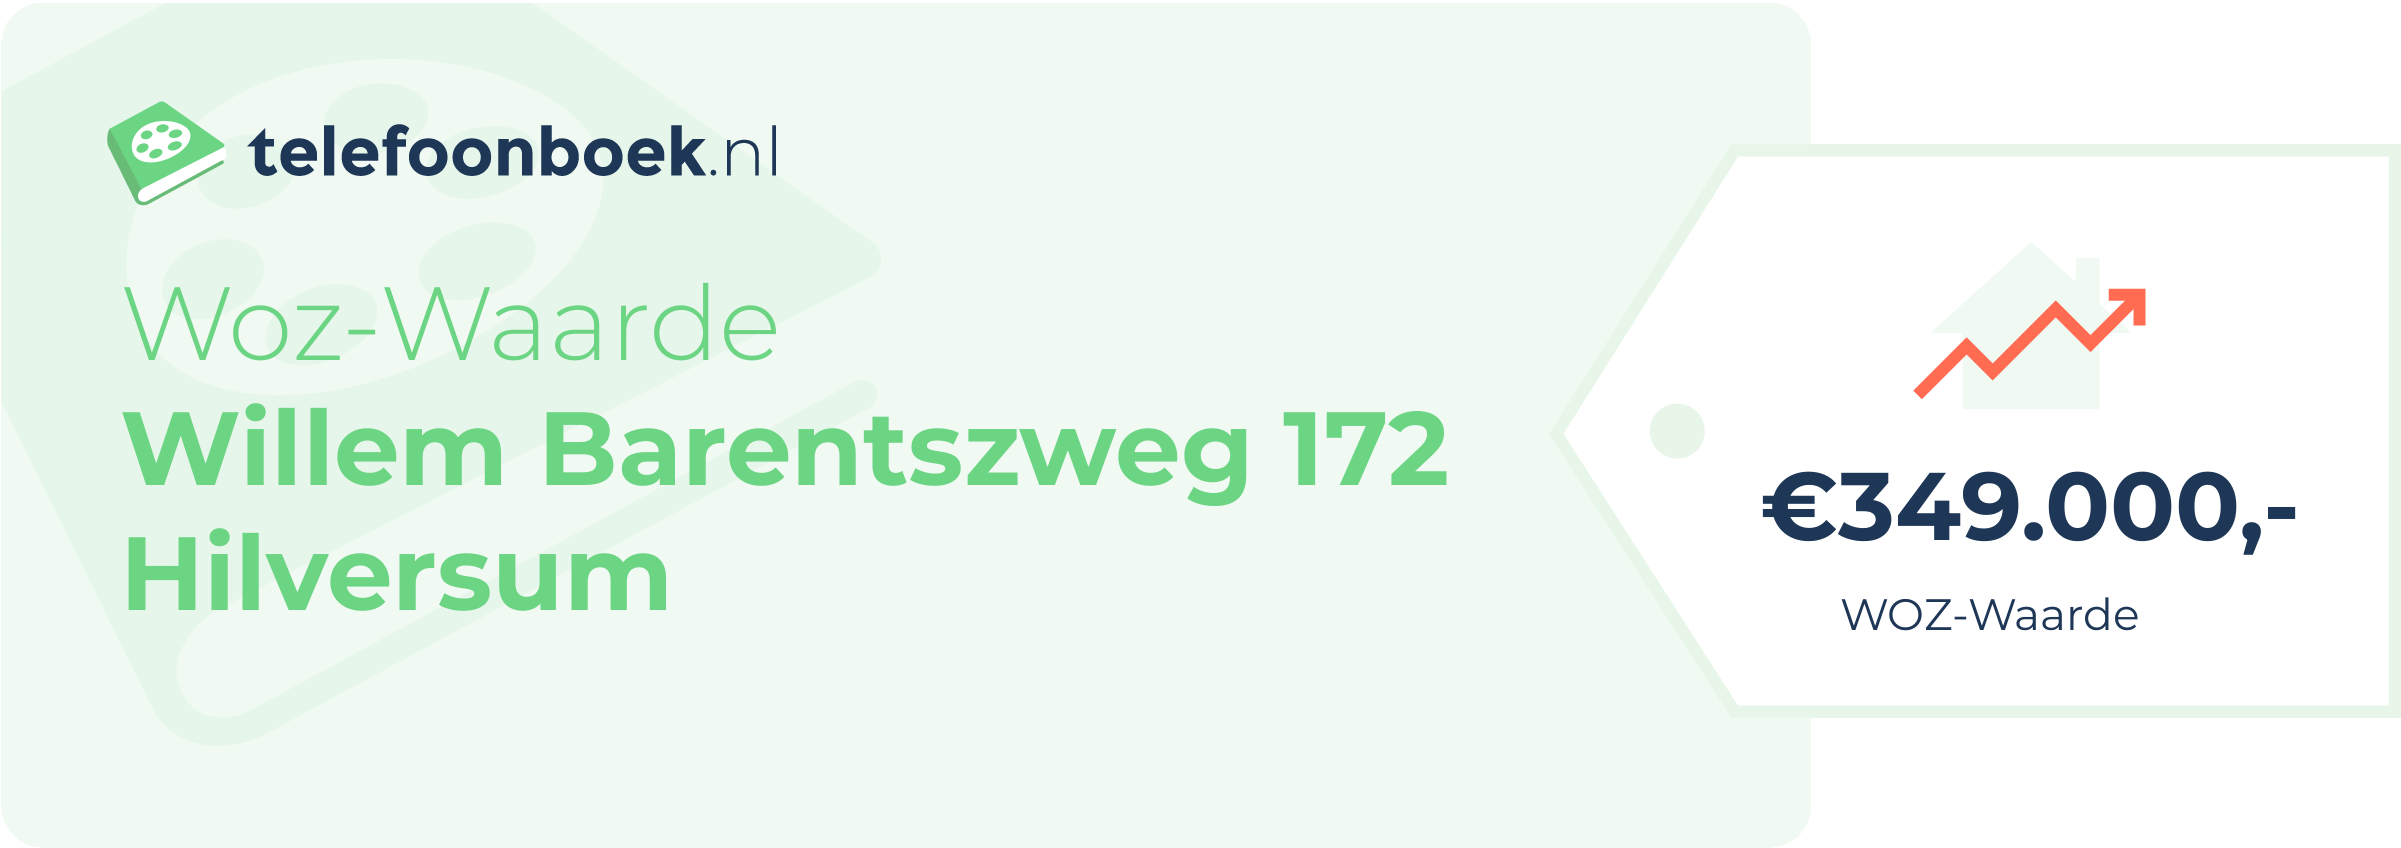 WOZ-waarde Willem Barentszweg 172 Hilversum